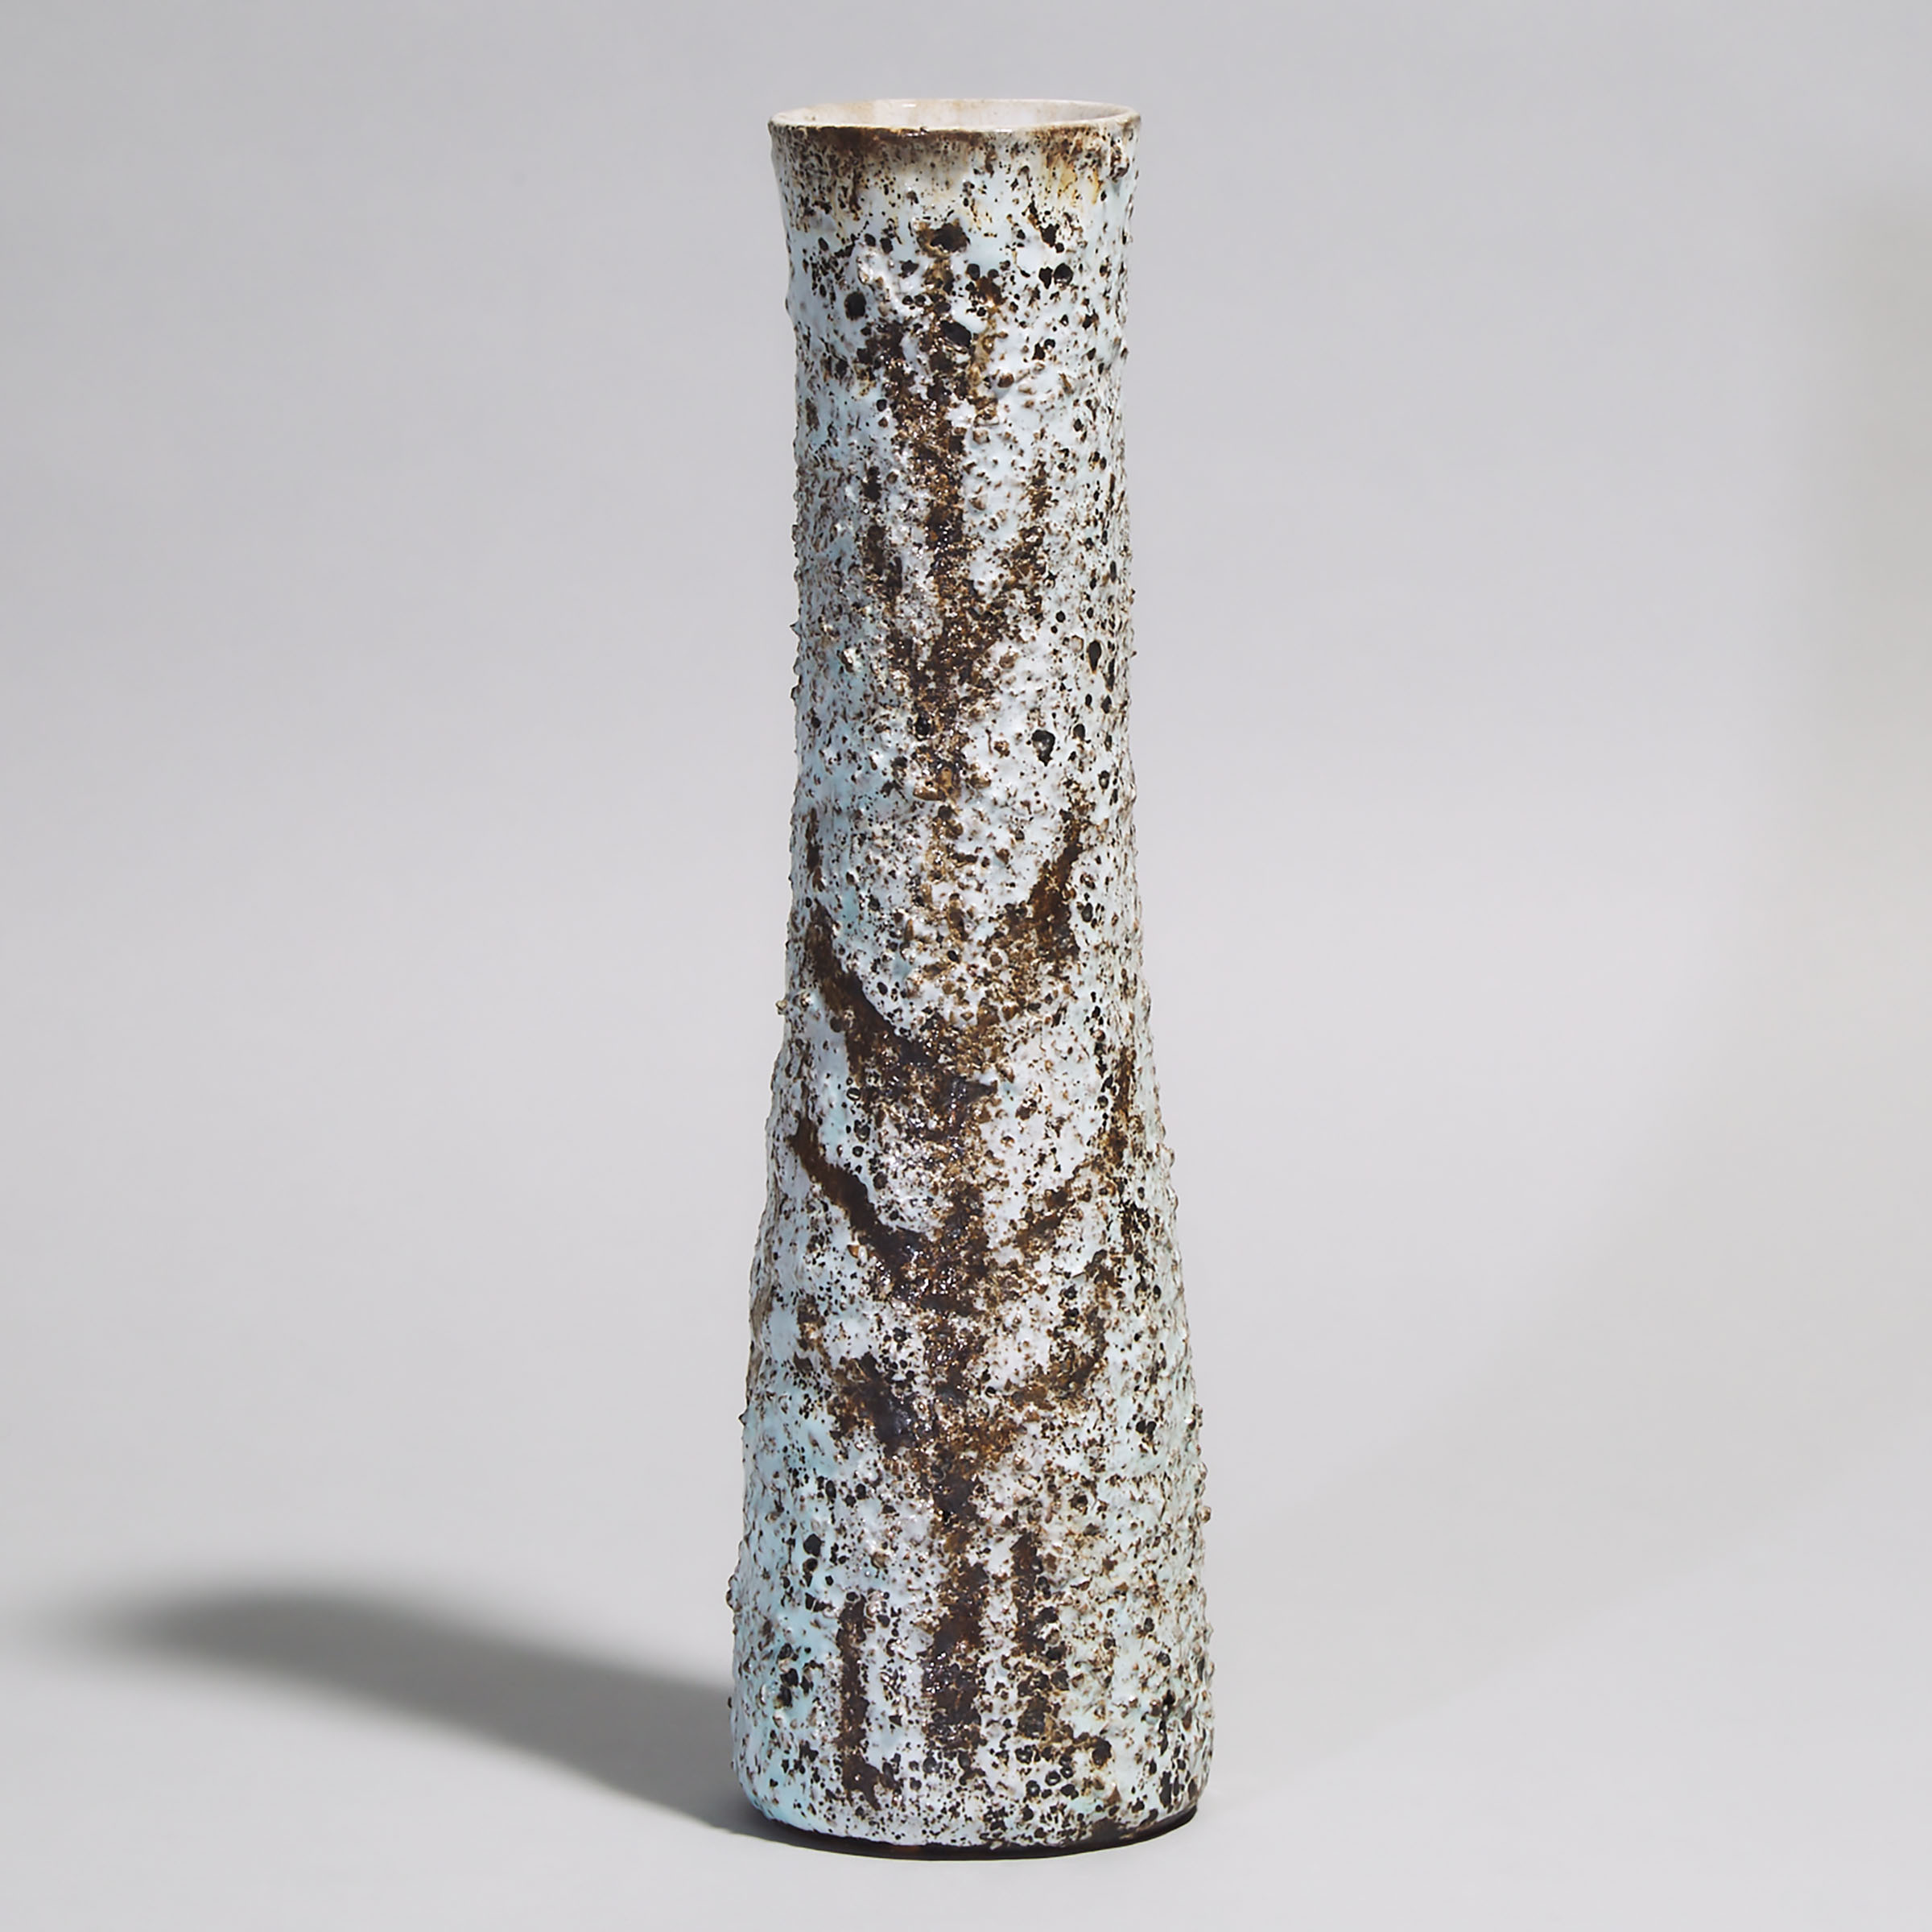 Tessa Kidick (Canadian, 1915-2002), Stoneware Vase, c.1963